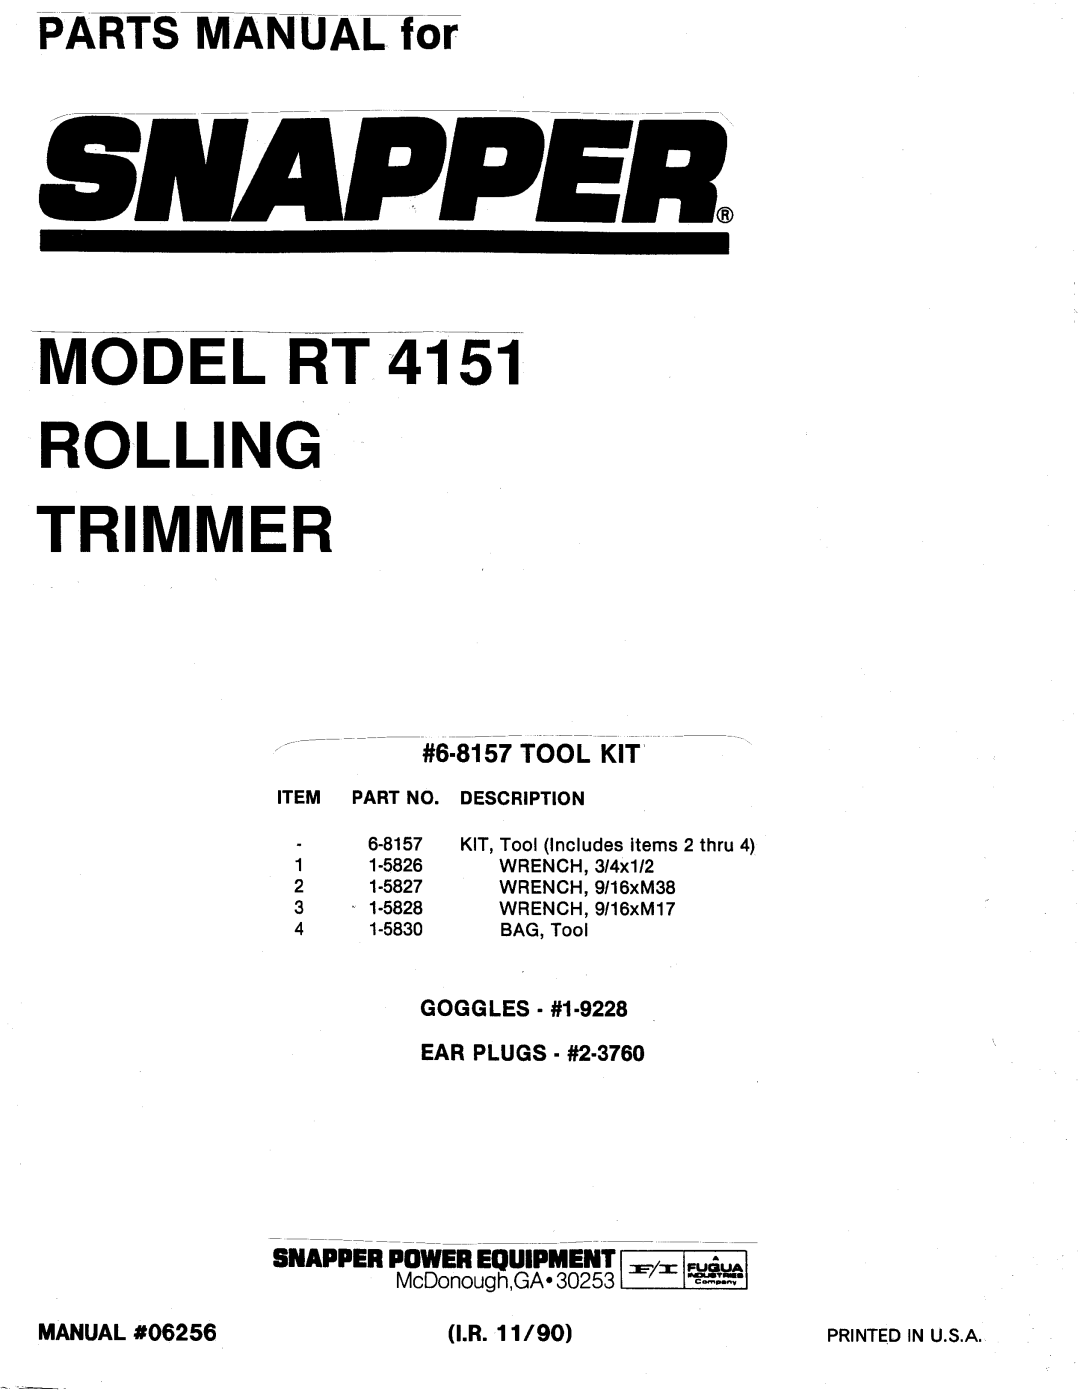 Snapper RT 4151 manual 